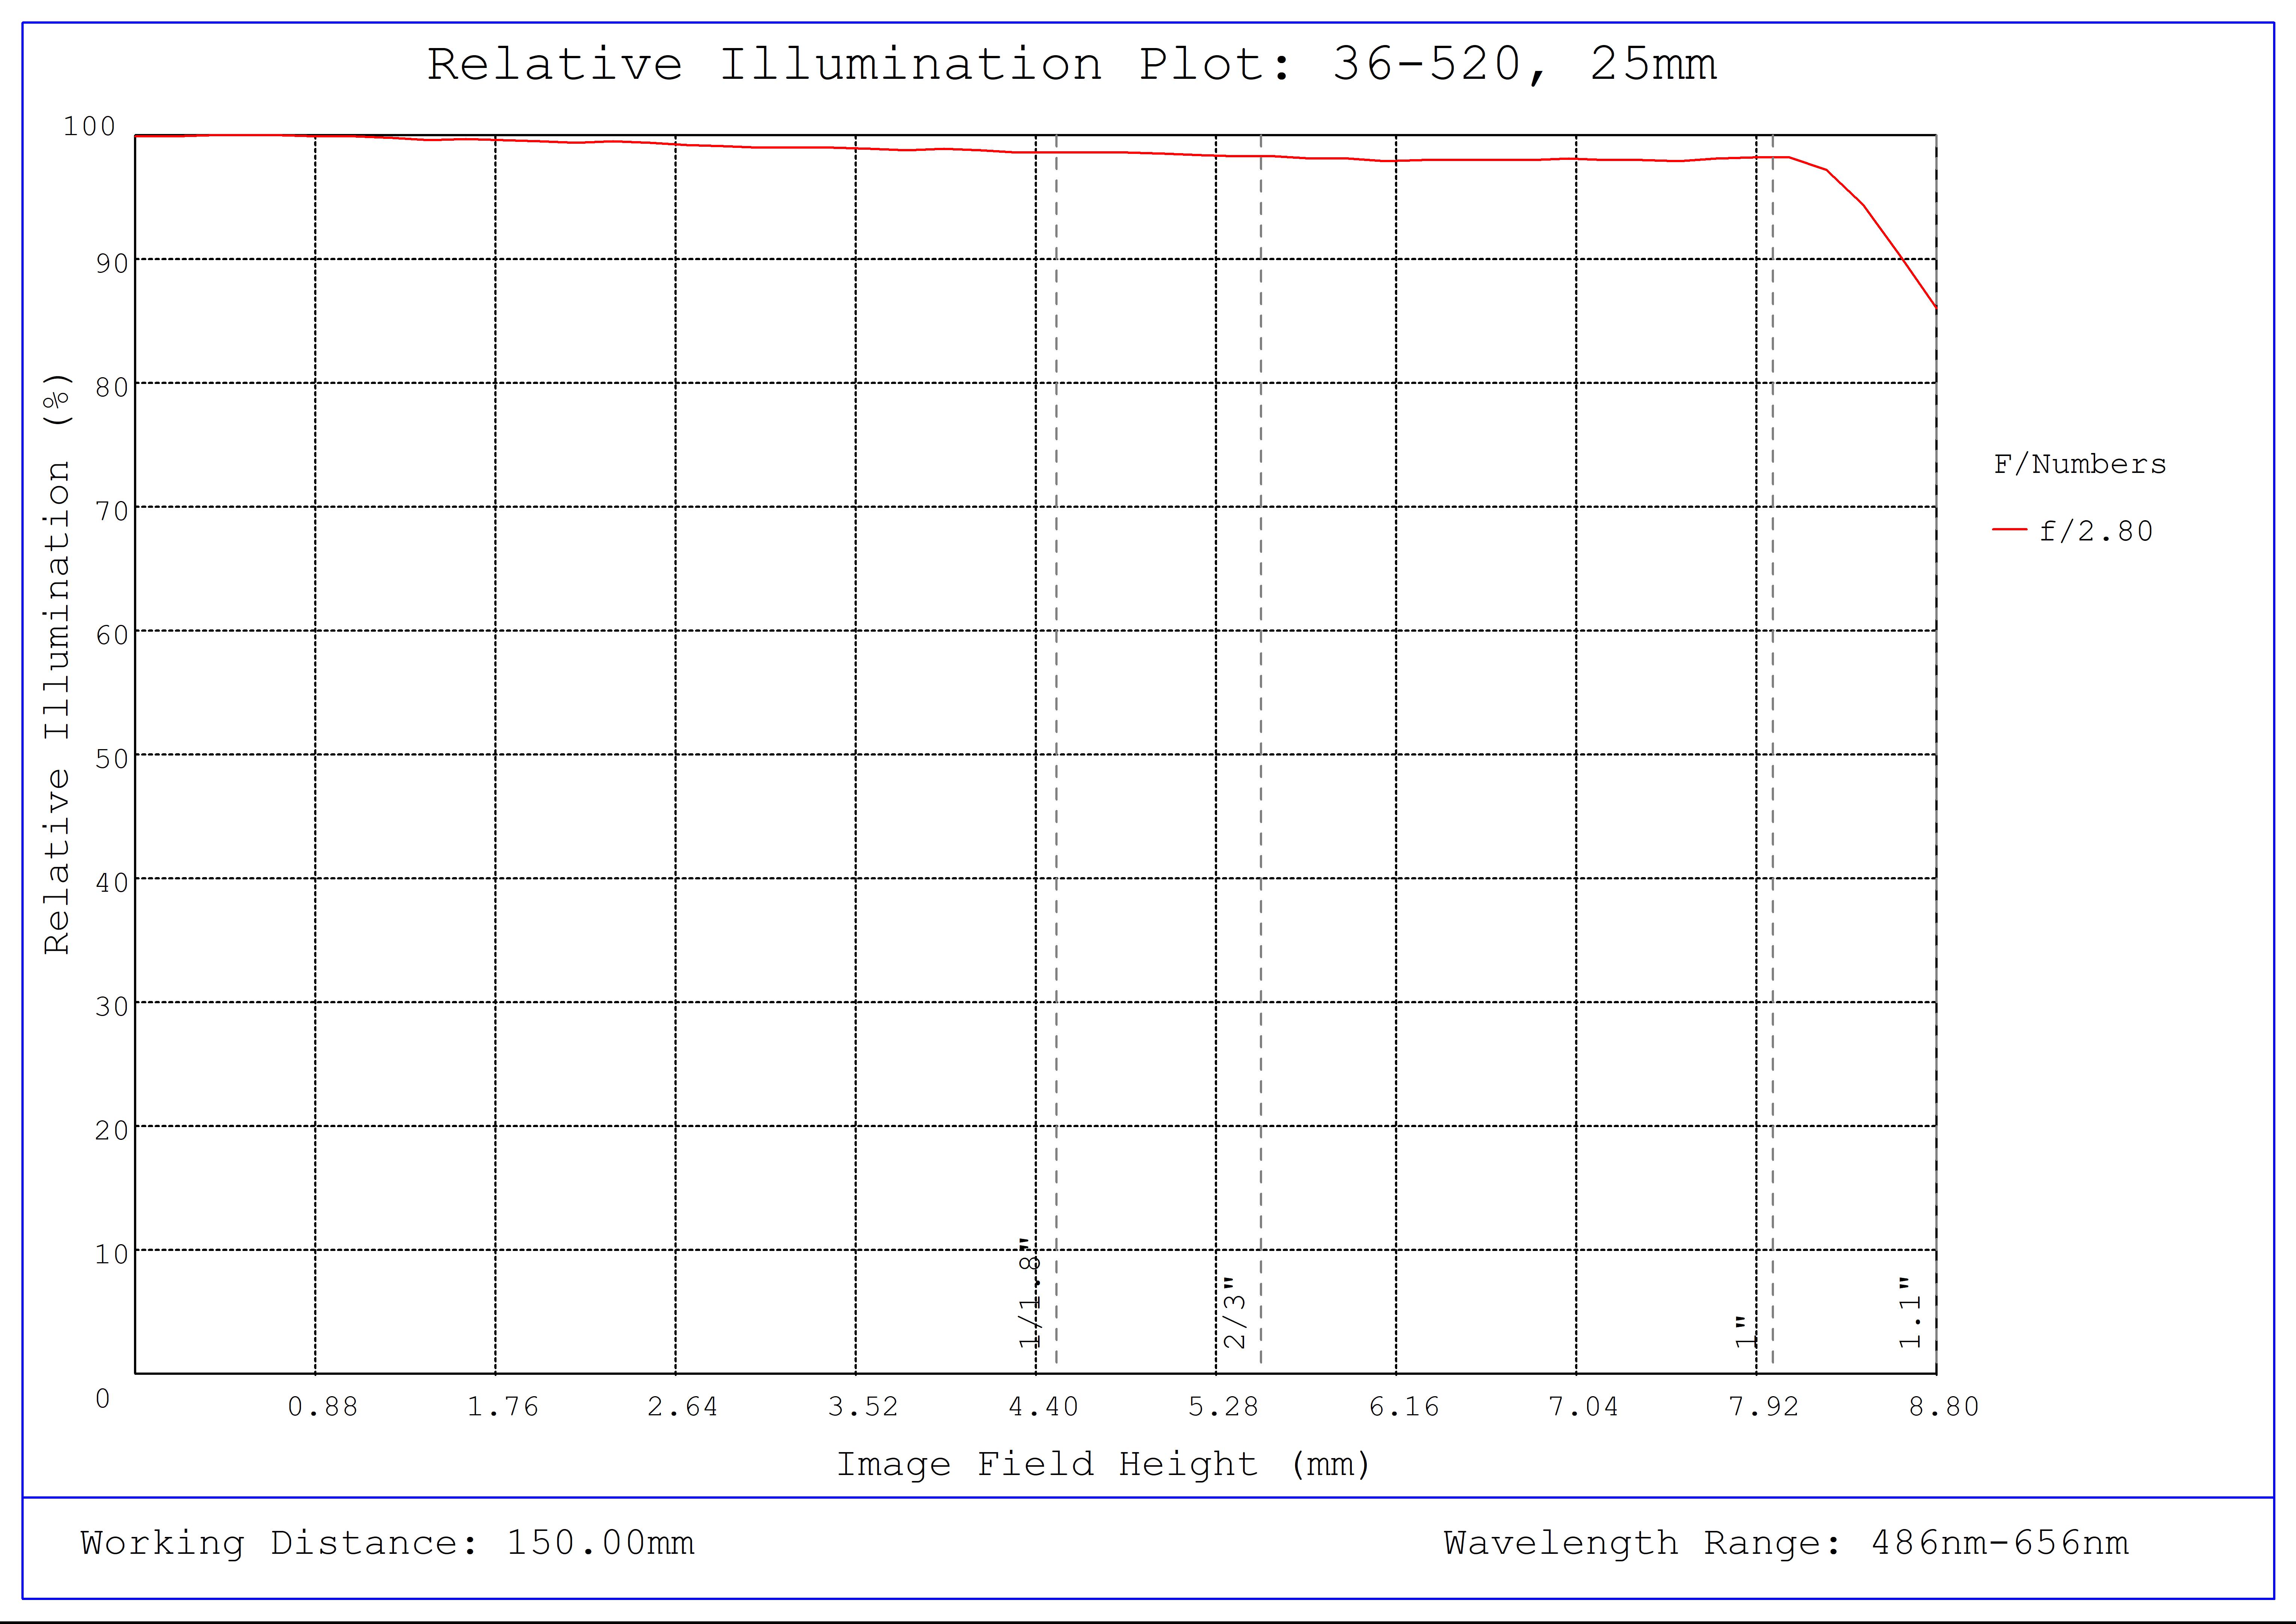 #36-520, 25mm f/2.8, HPr Series Fixed Focal Length Lens, Relative Illumination Plot